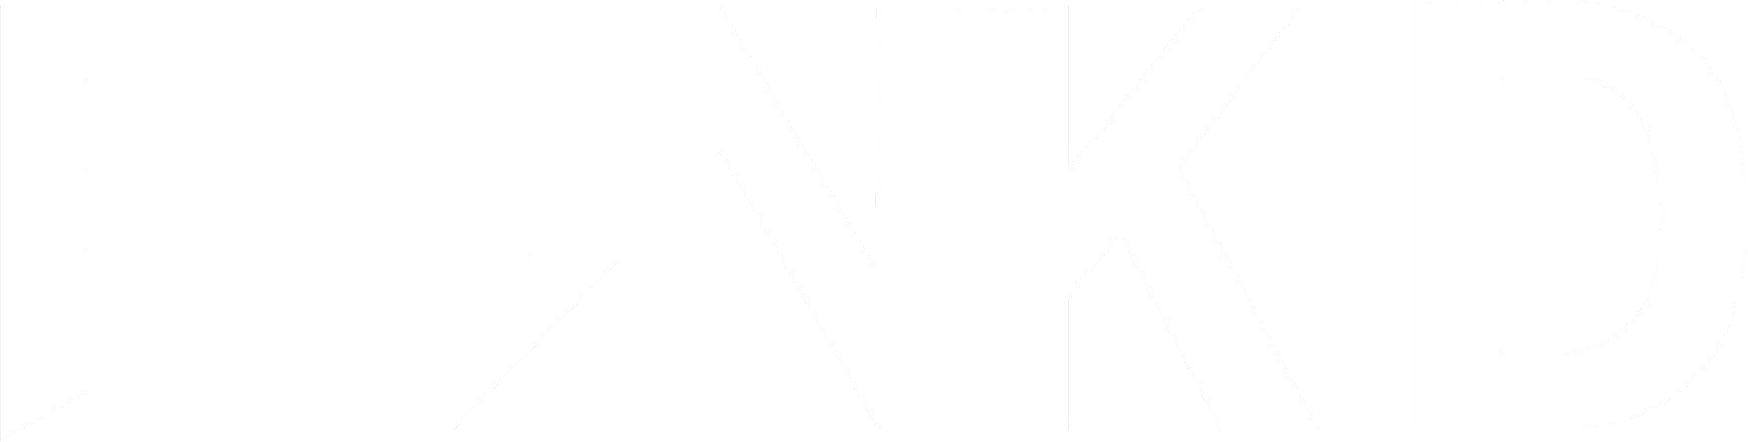 FUNK D logo mobile